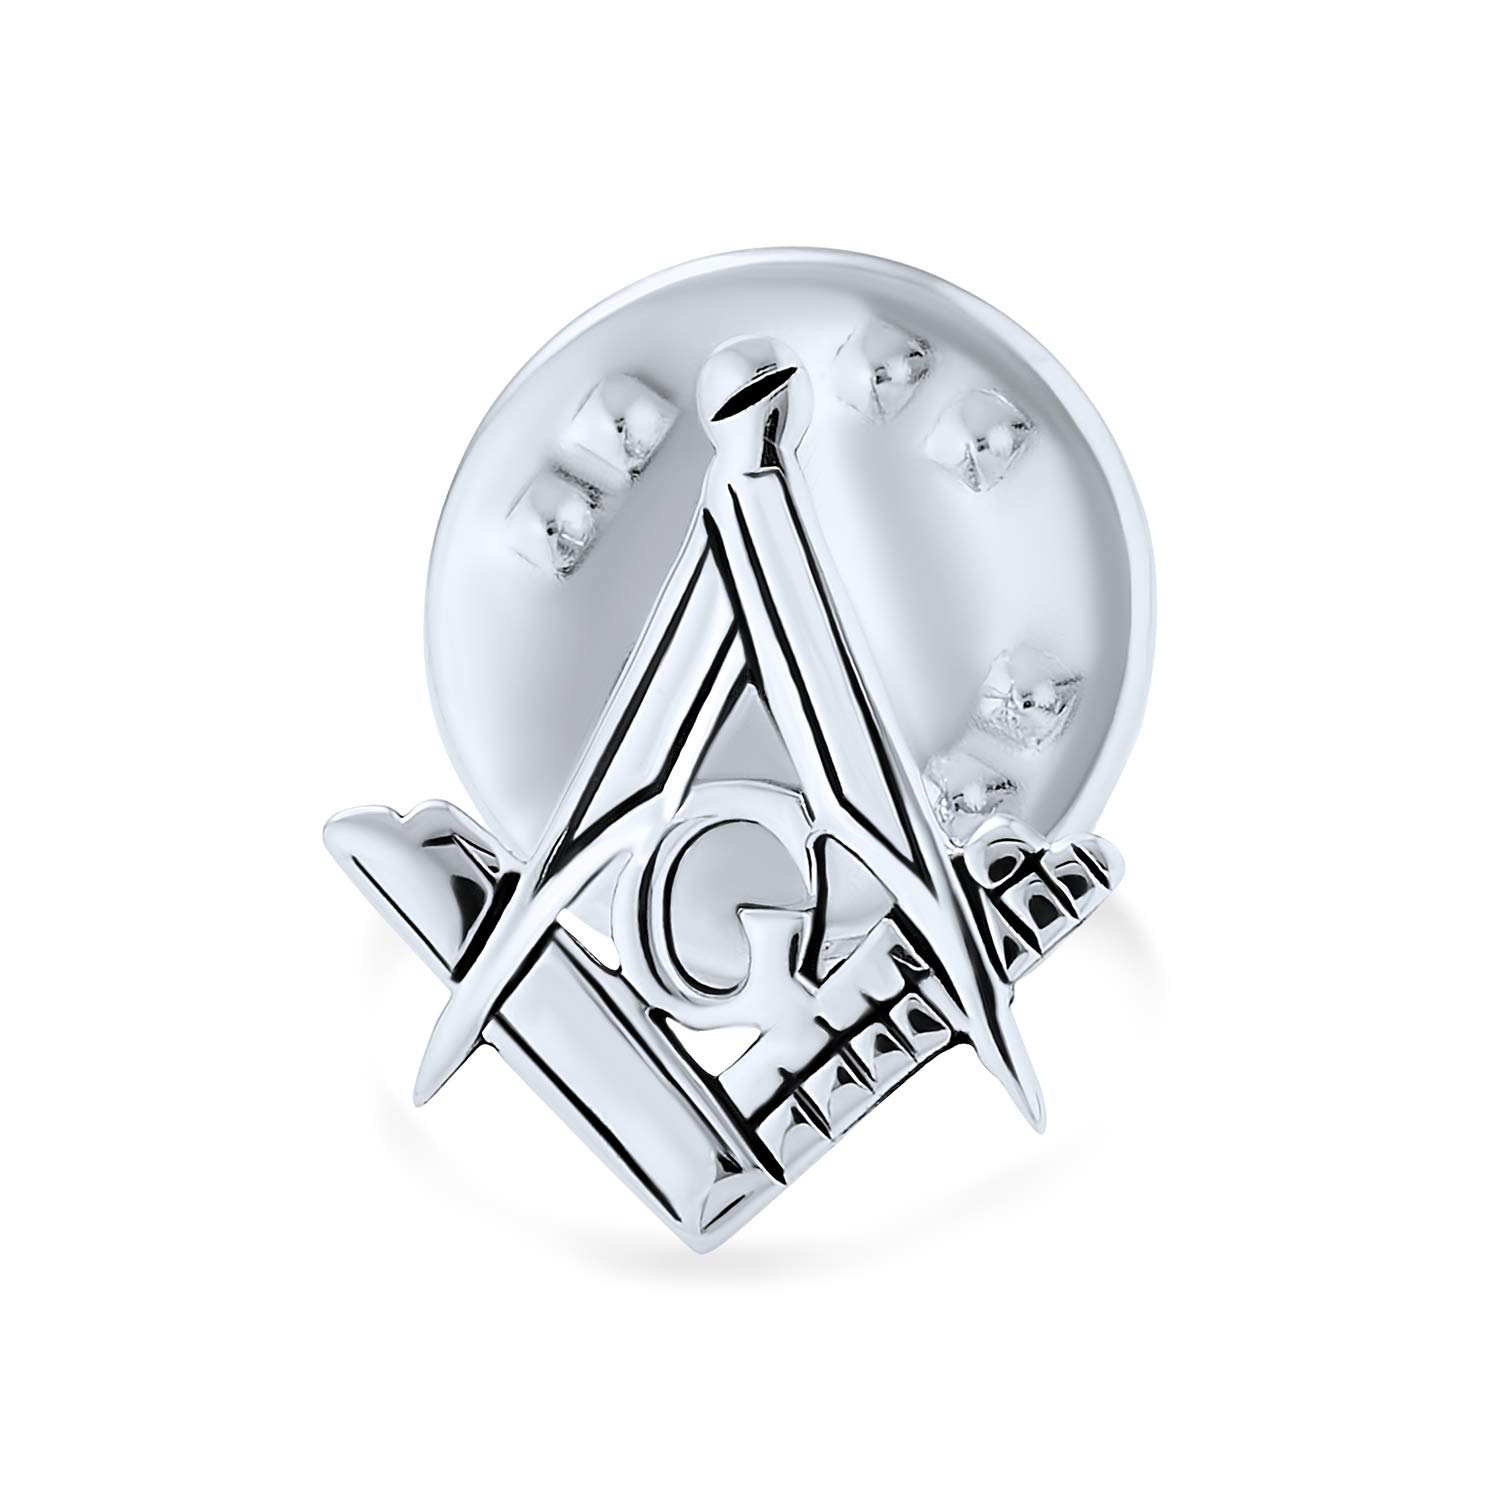 Freemasons Masonic Compass Symbol Lapel Pin Apprentice Square For Men For Women .925 Sterling Silver